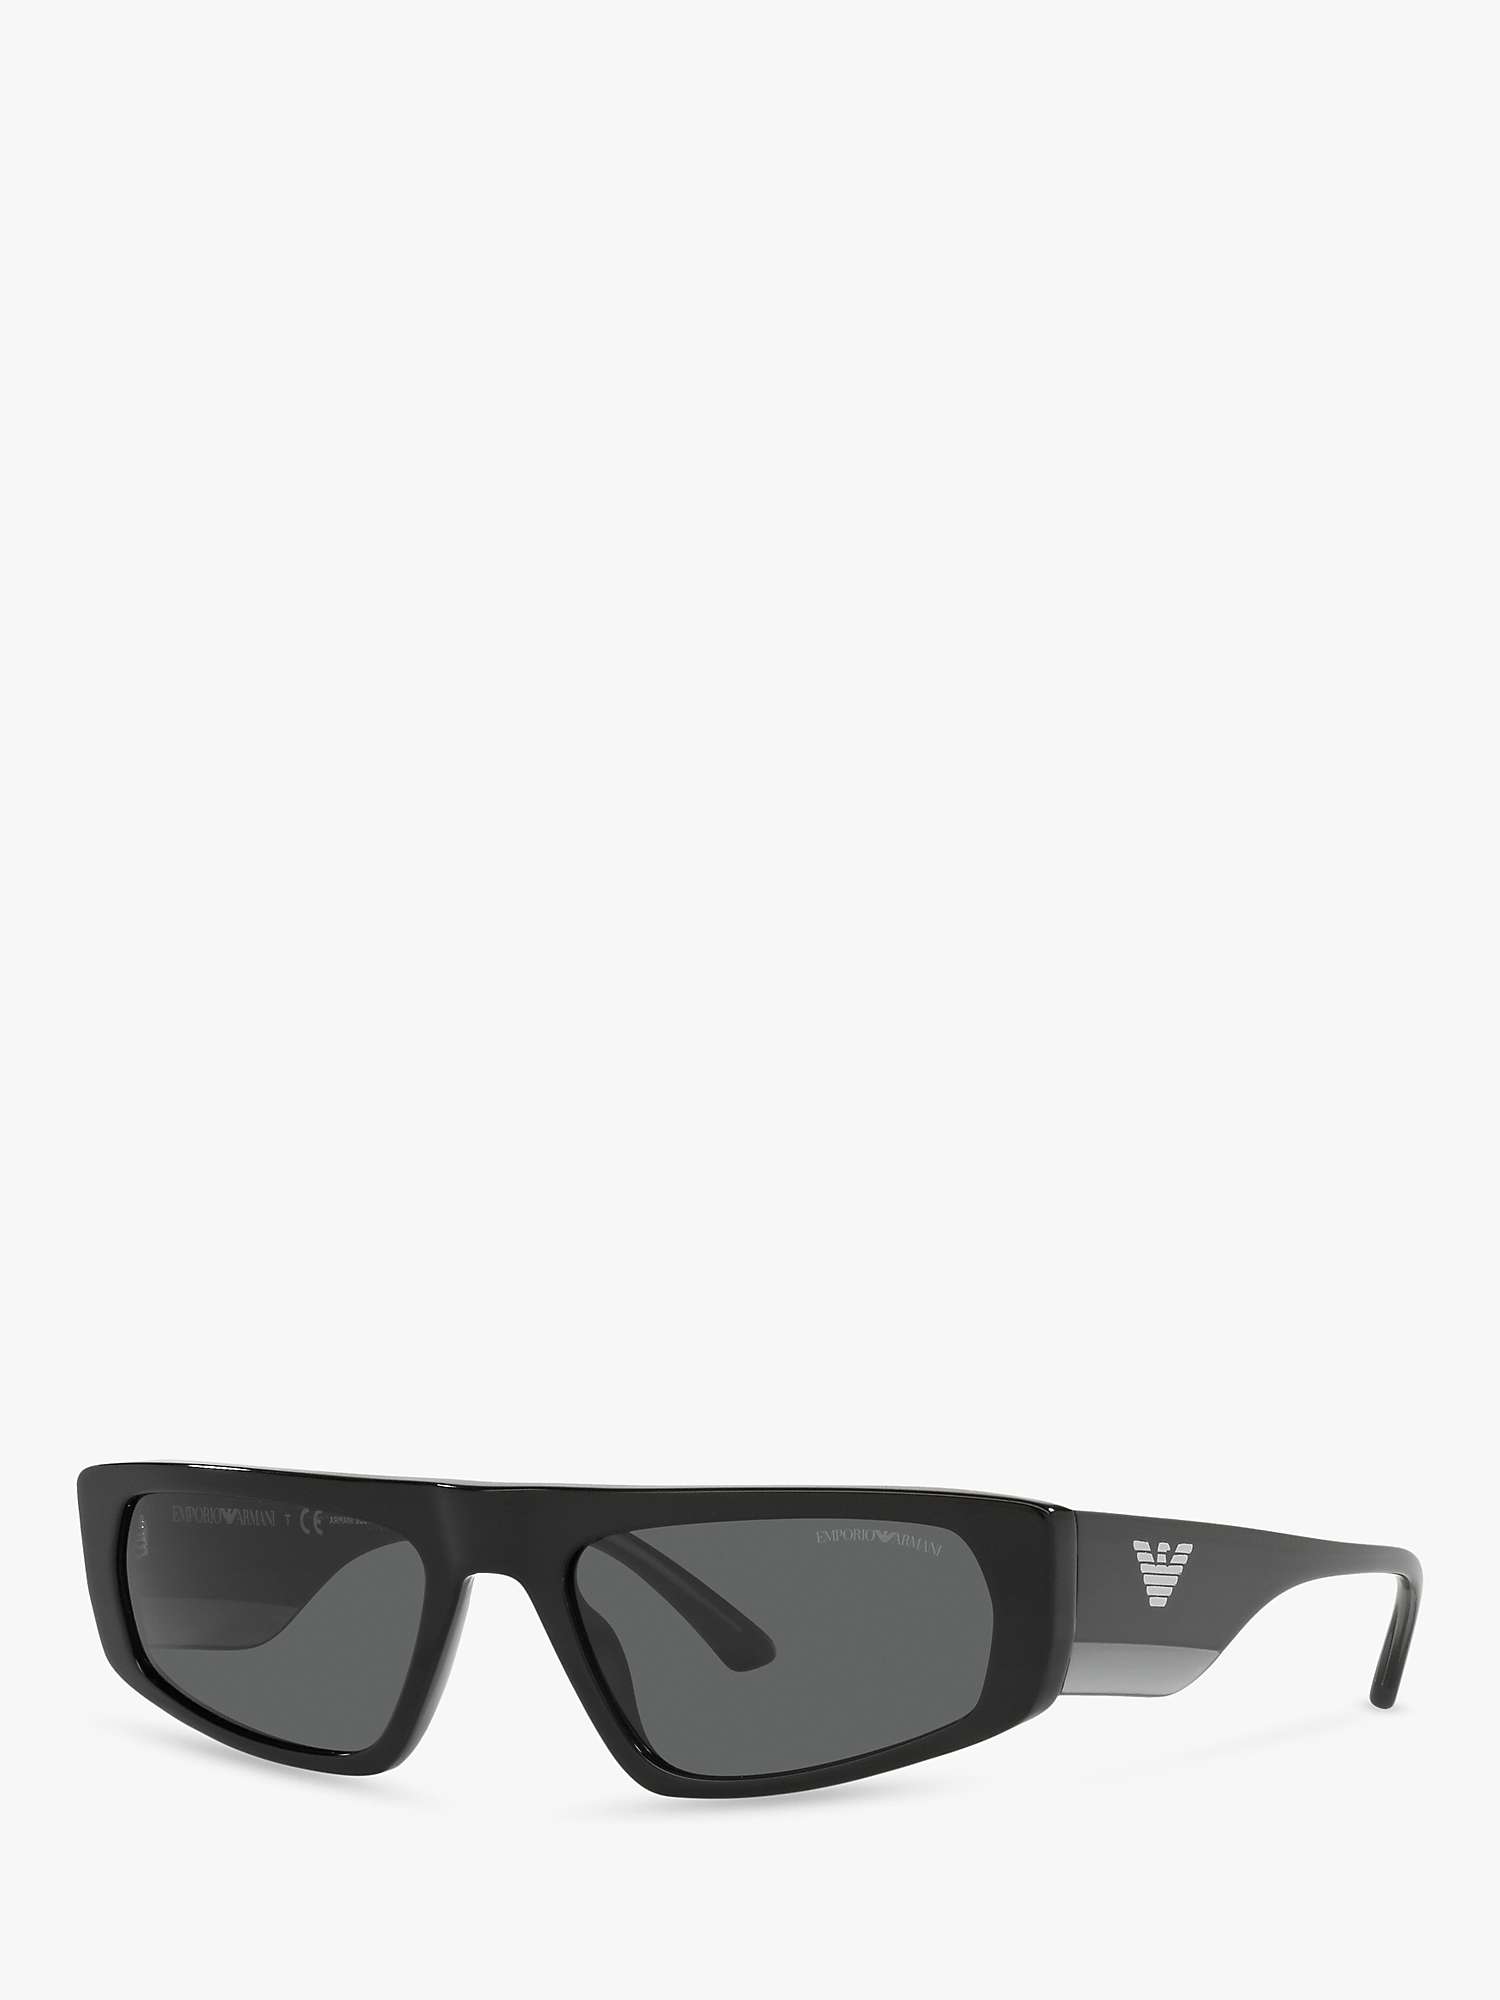 Buy Emporio Armani EA4168 Men's Pillow Sunglasses, Black/Grey Online at johnlewis.com